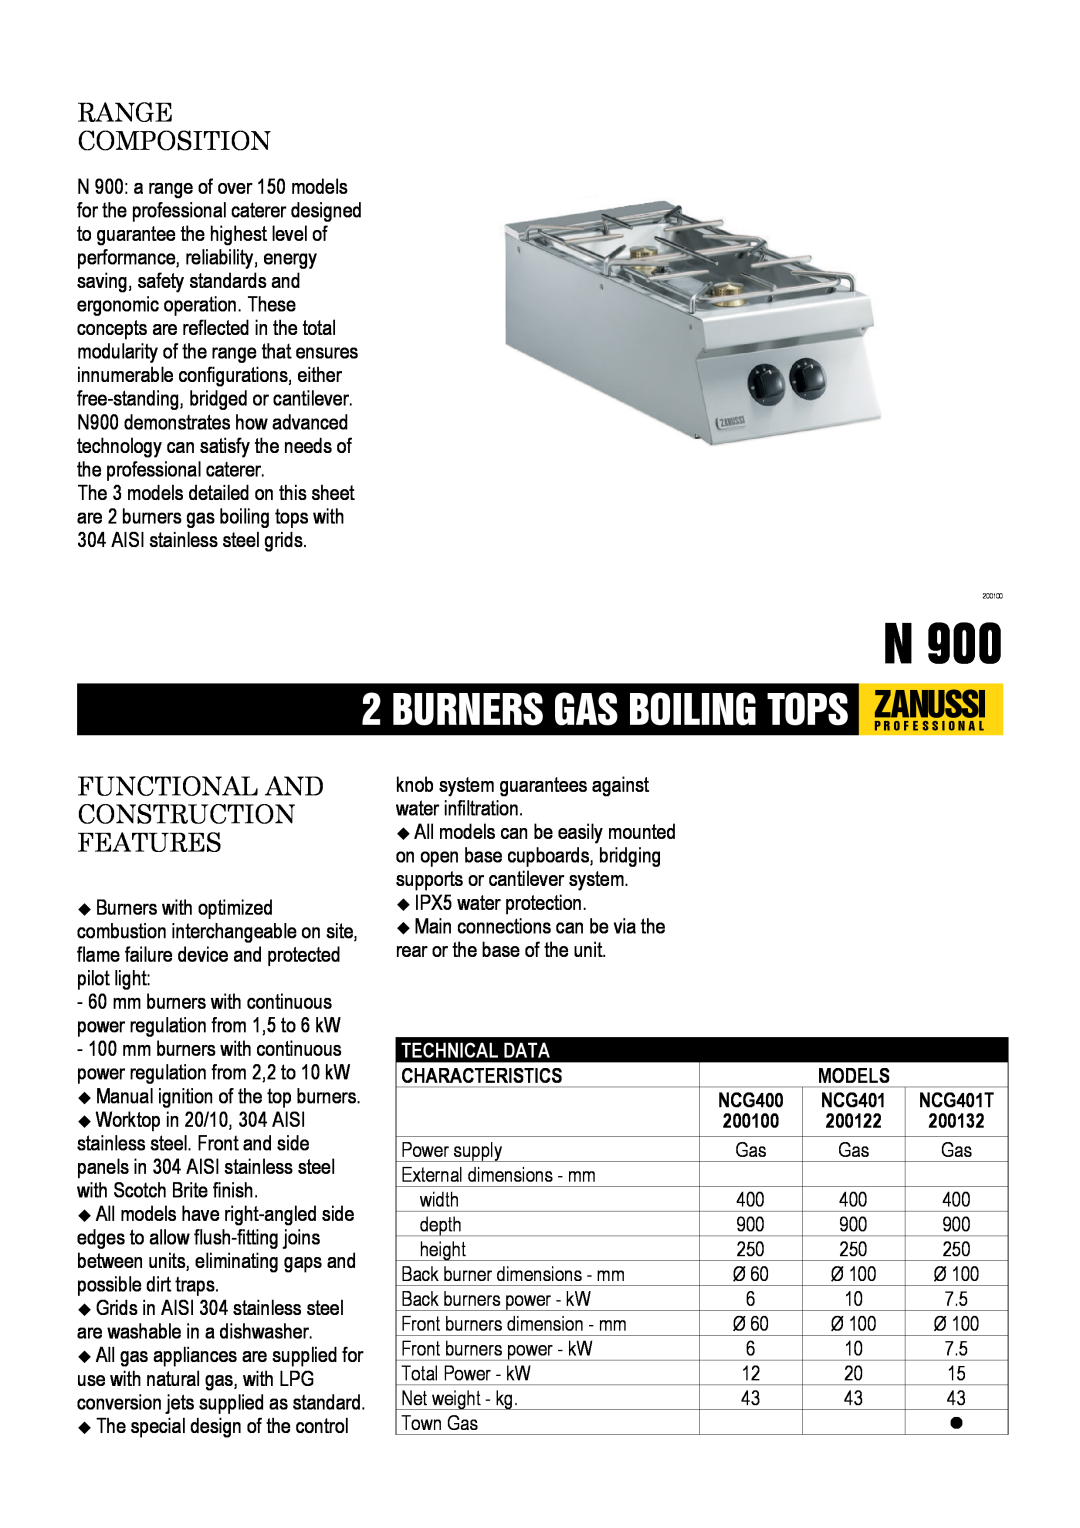 Zanussi NCG400 dimensions Burners Gas Boiling Tops Zanussip R O F E S S I O N A L, Range Composition, Technical Data 